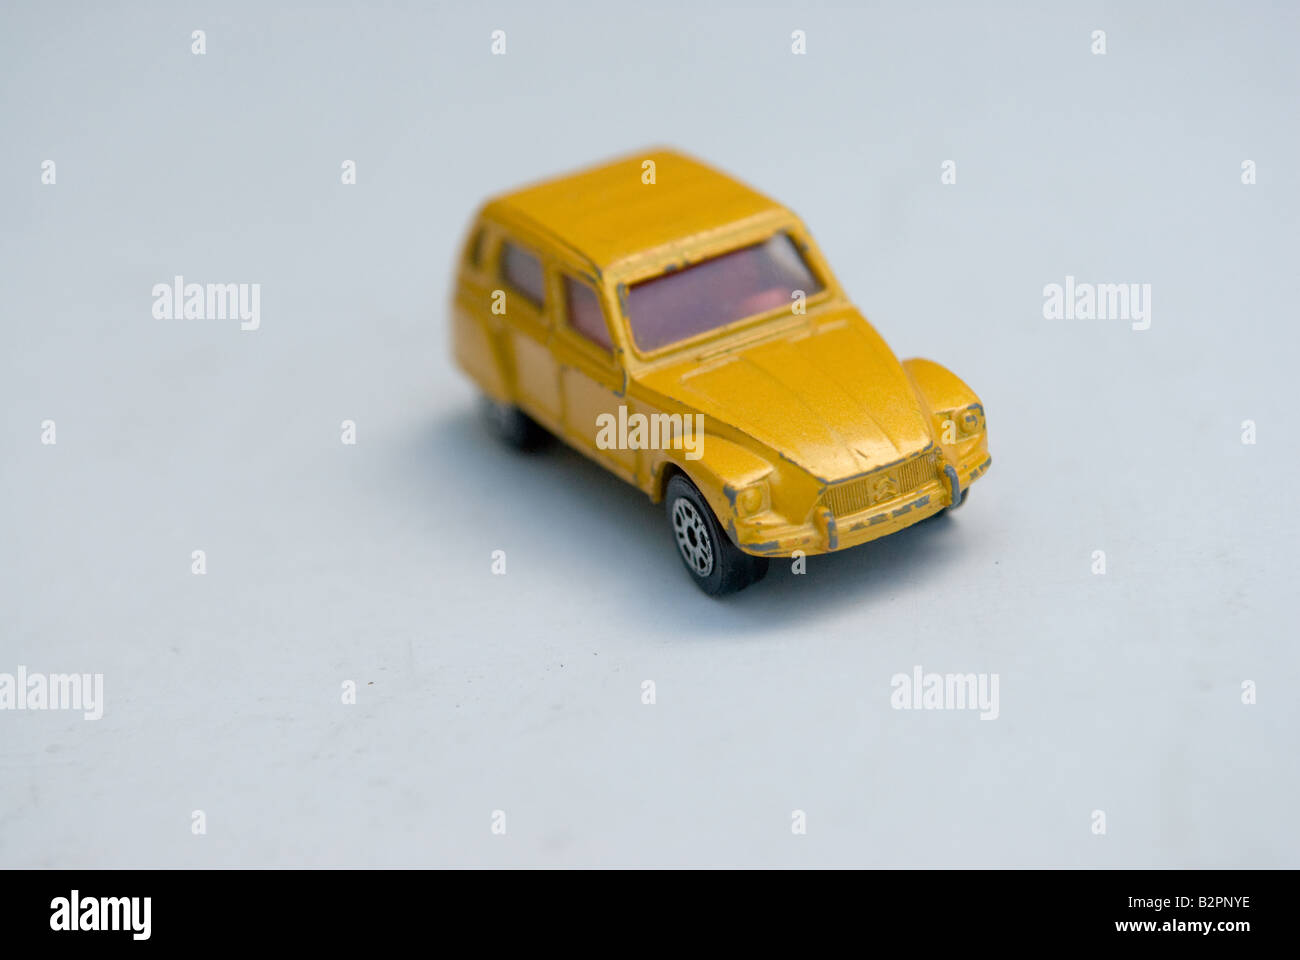 model yellow citroen toy car on white background Stock Photo